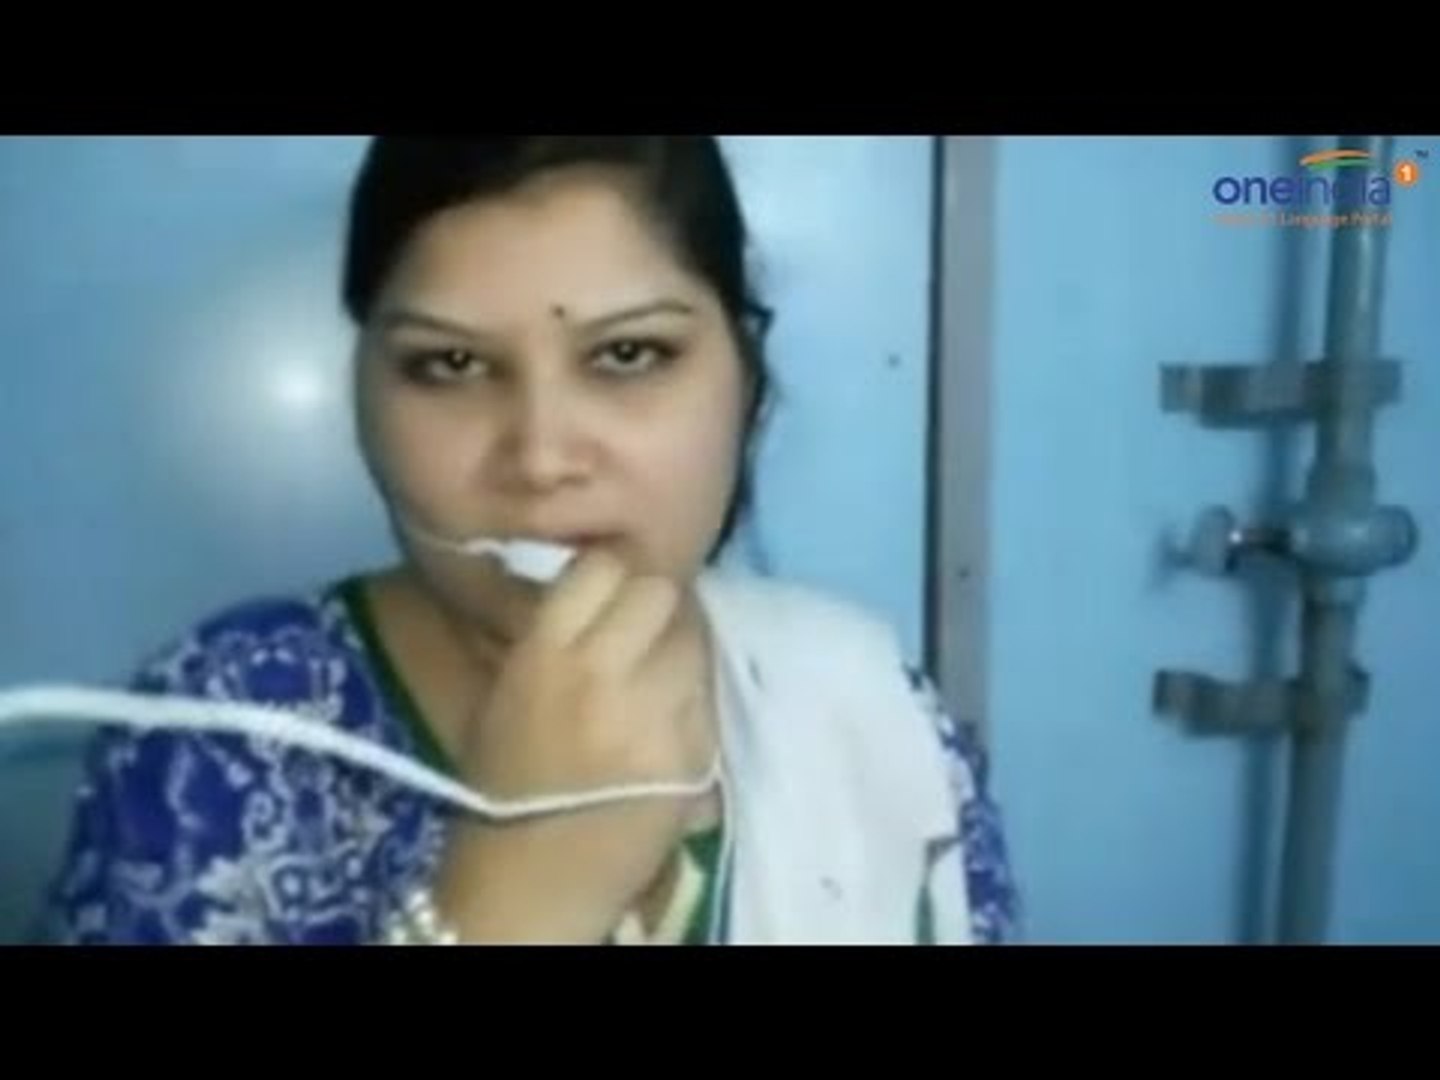 Musalimsex - Muslim Girl makes video before honour killing | Oneindia News - video  Dailymotion